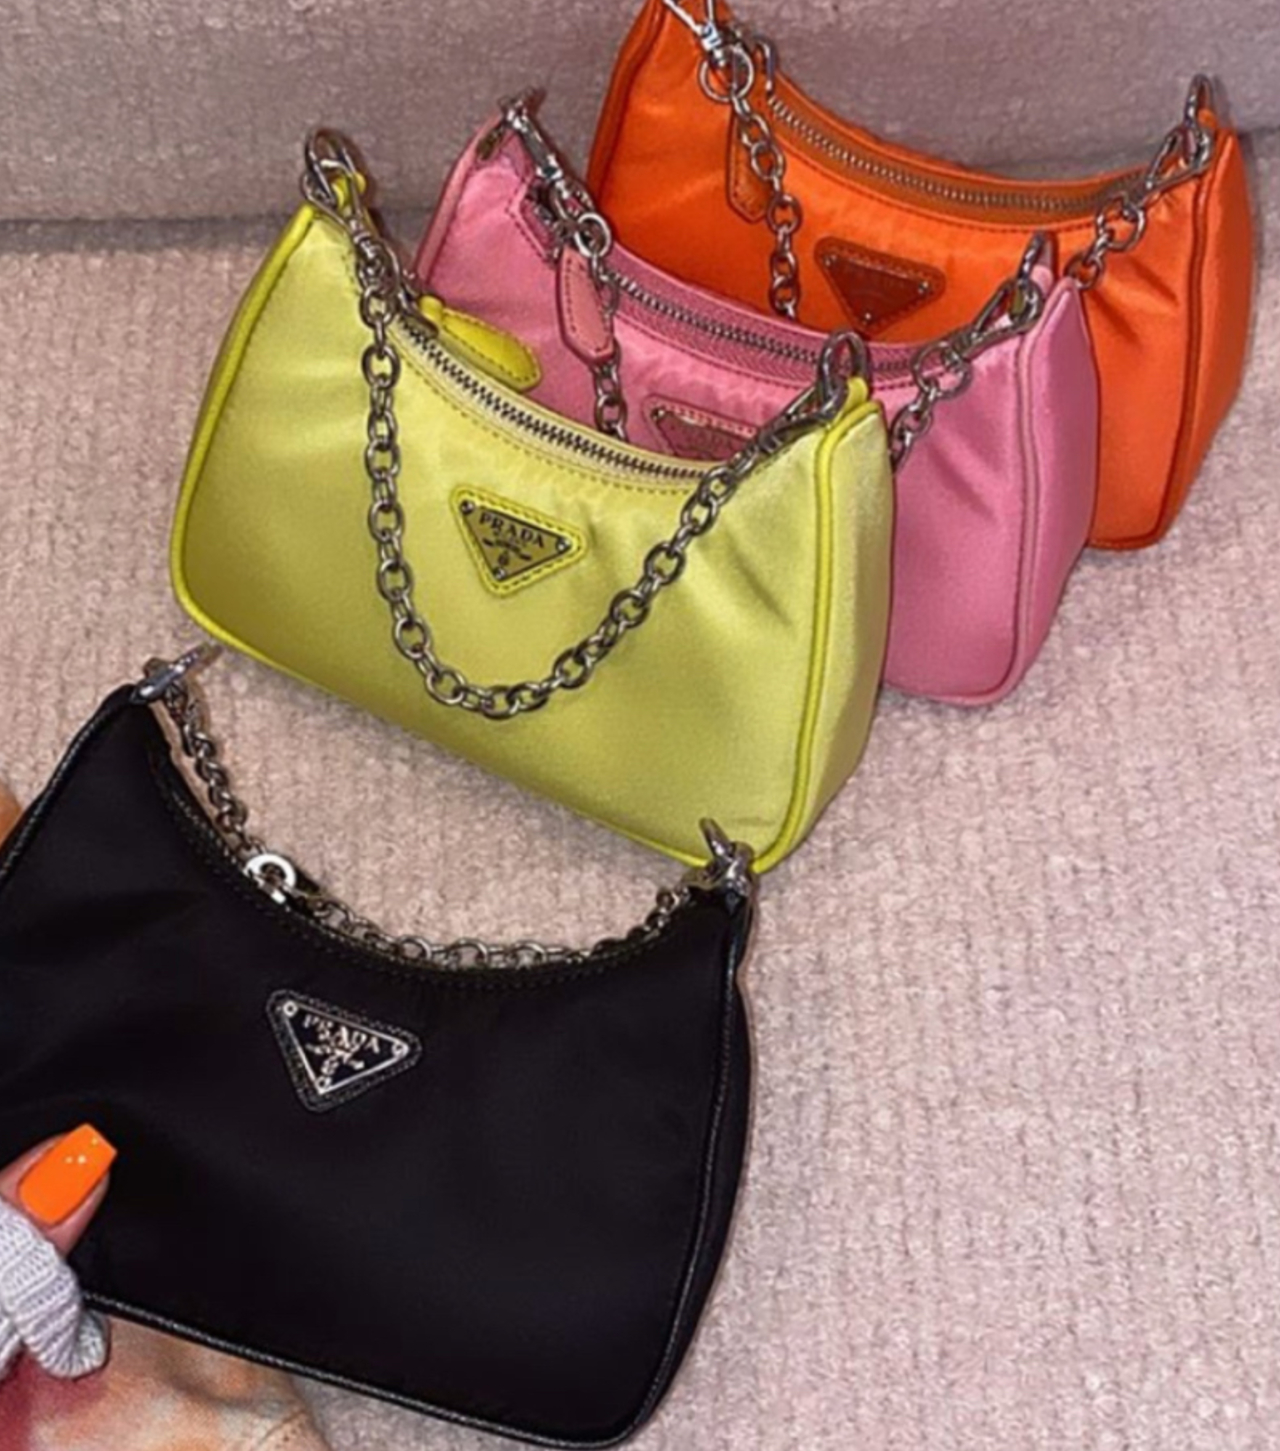 Stormi Webster's Prada bag collection